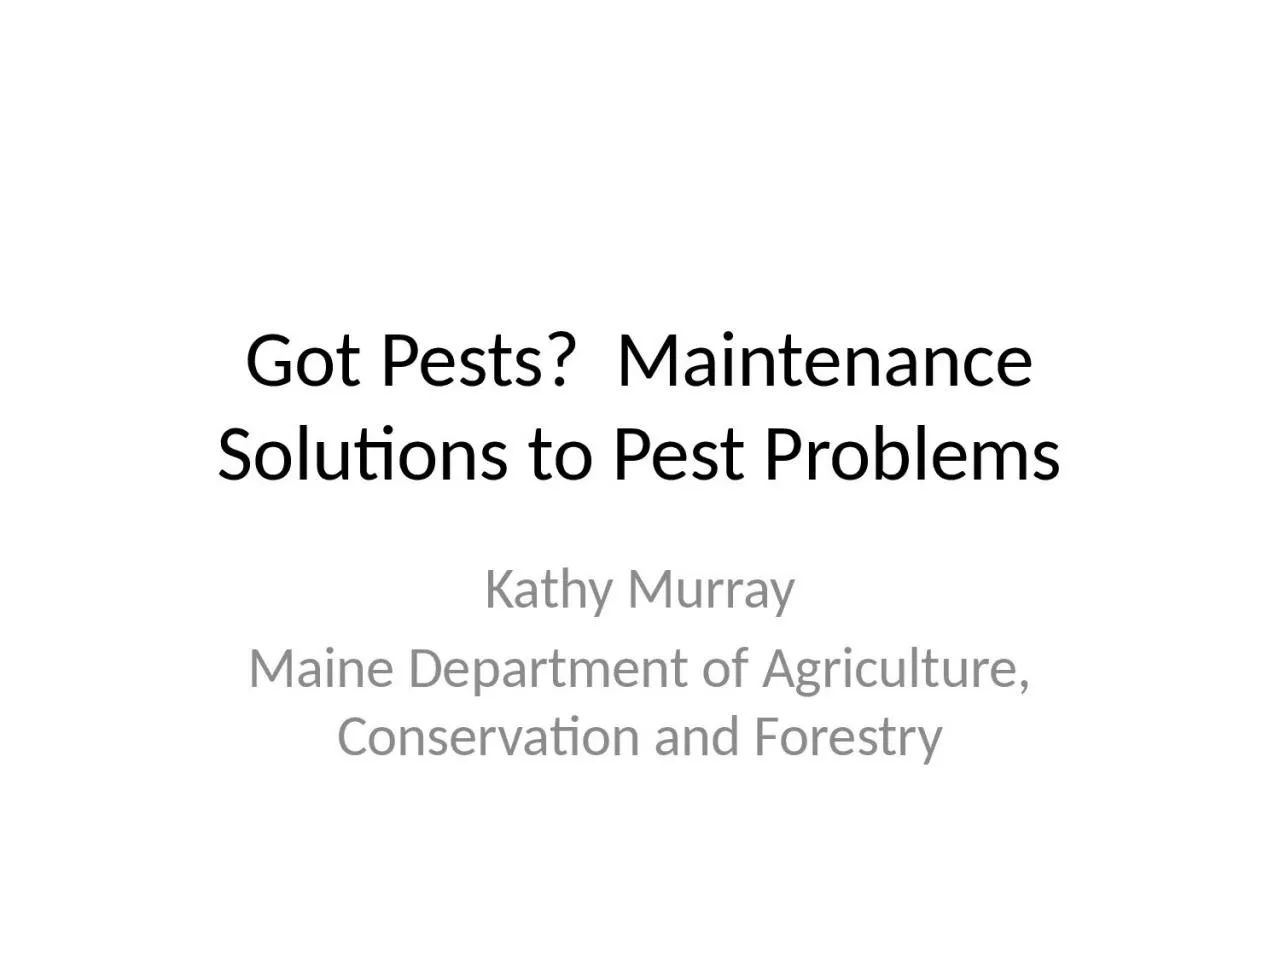 Got Pests?  Maintenance Solutions to Pest Problems